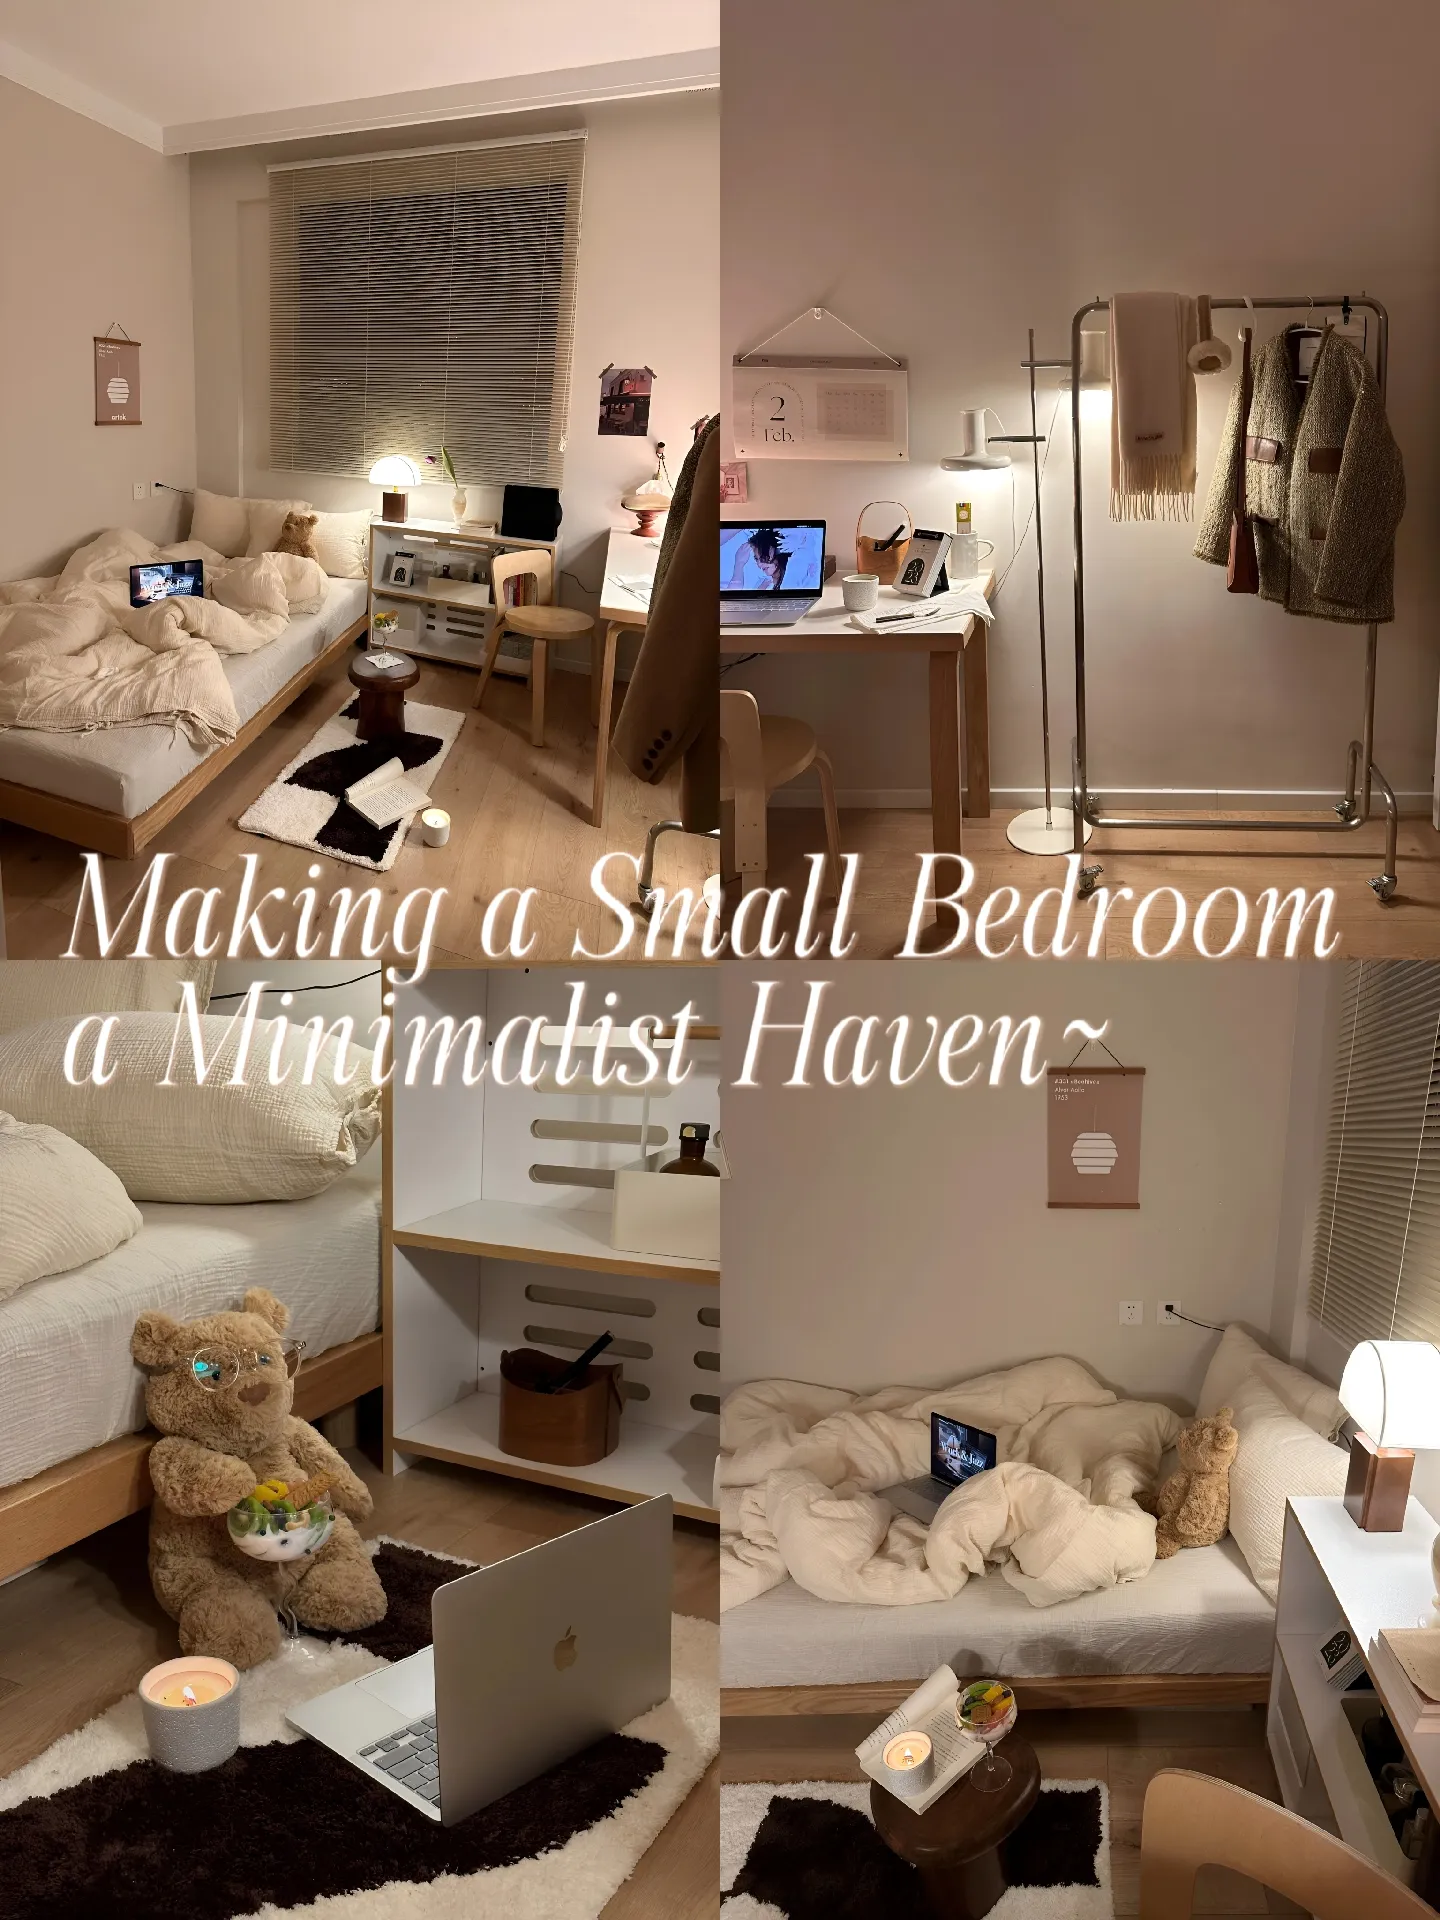 60+ Aesthetic Dorm Room Ideas On A Budget - DIY With My Guy